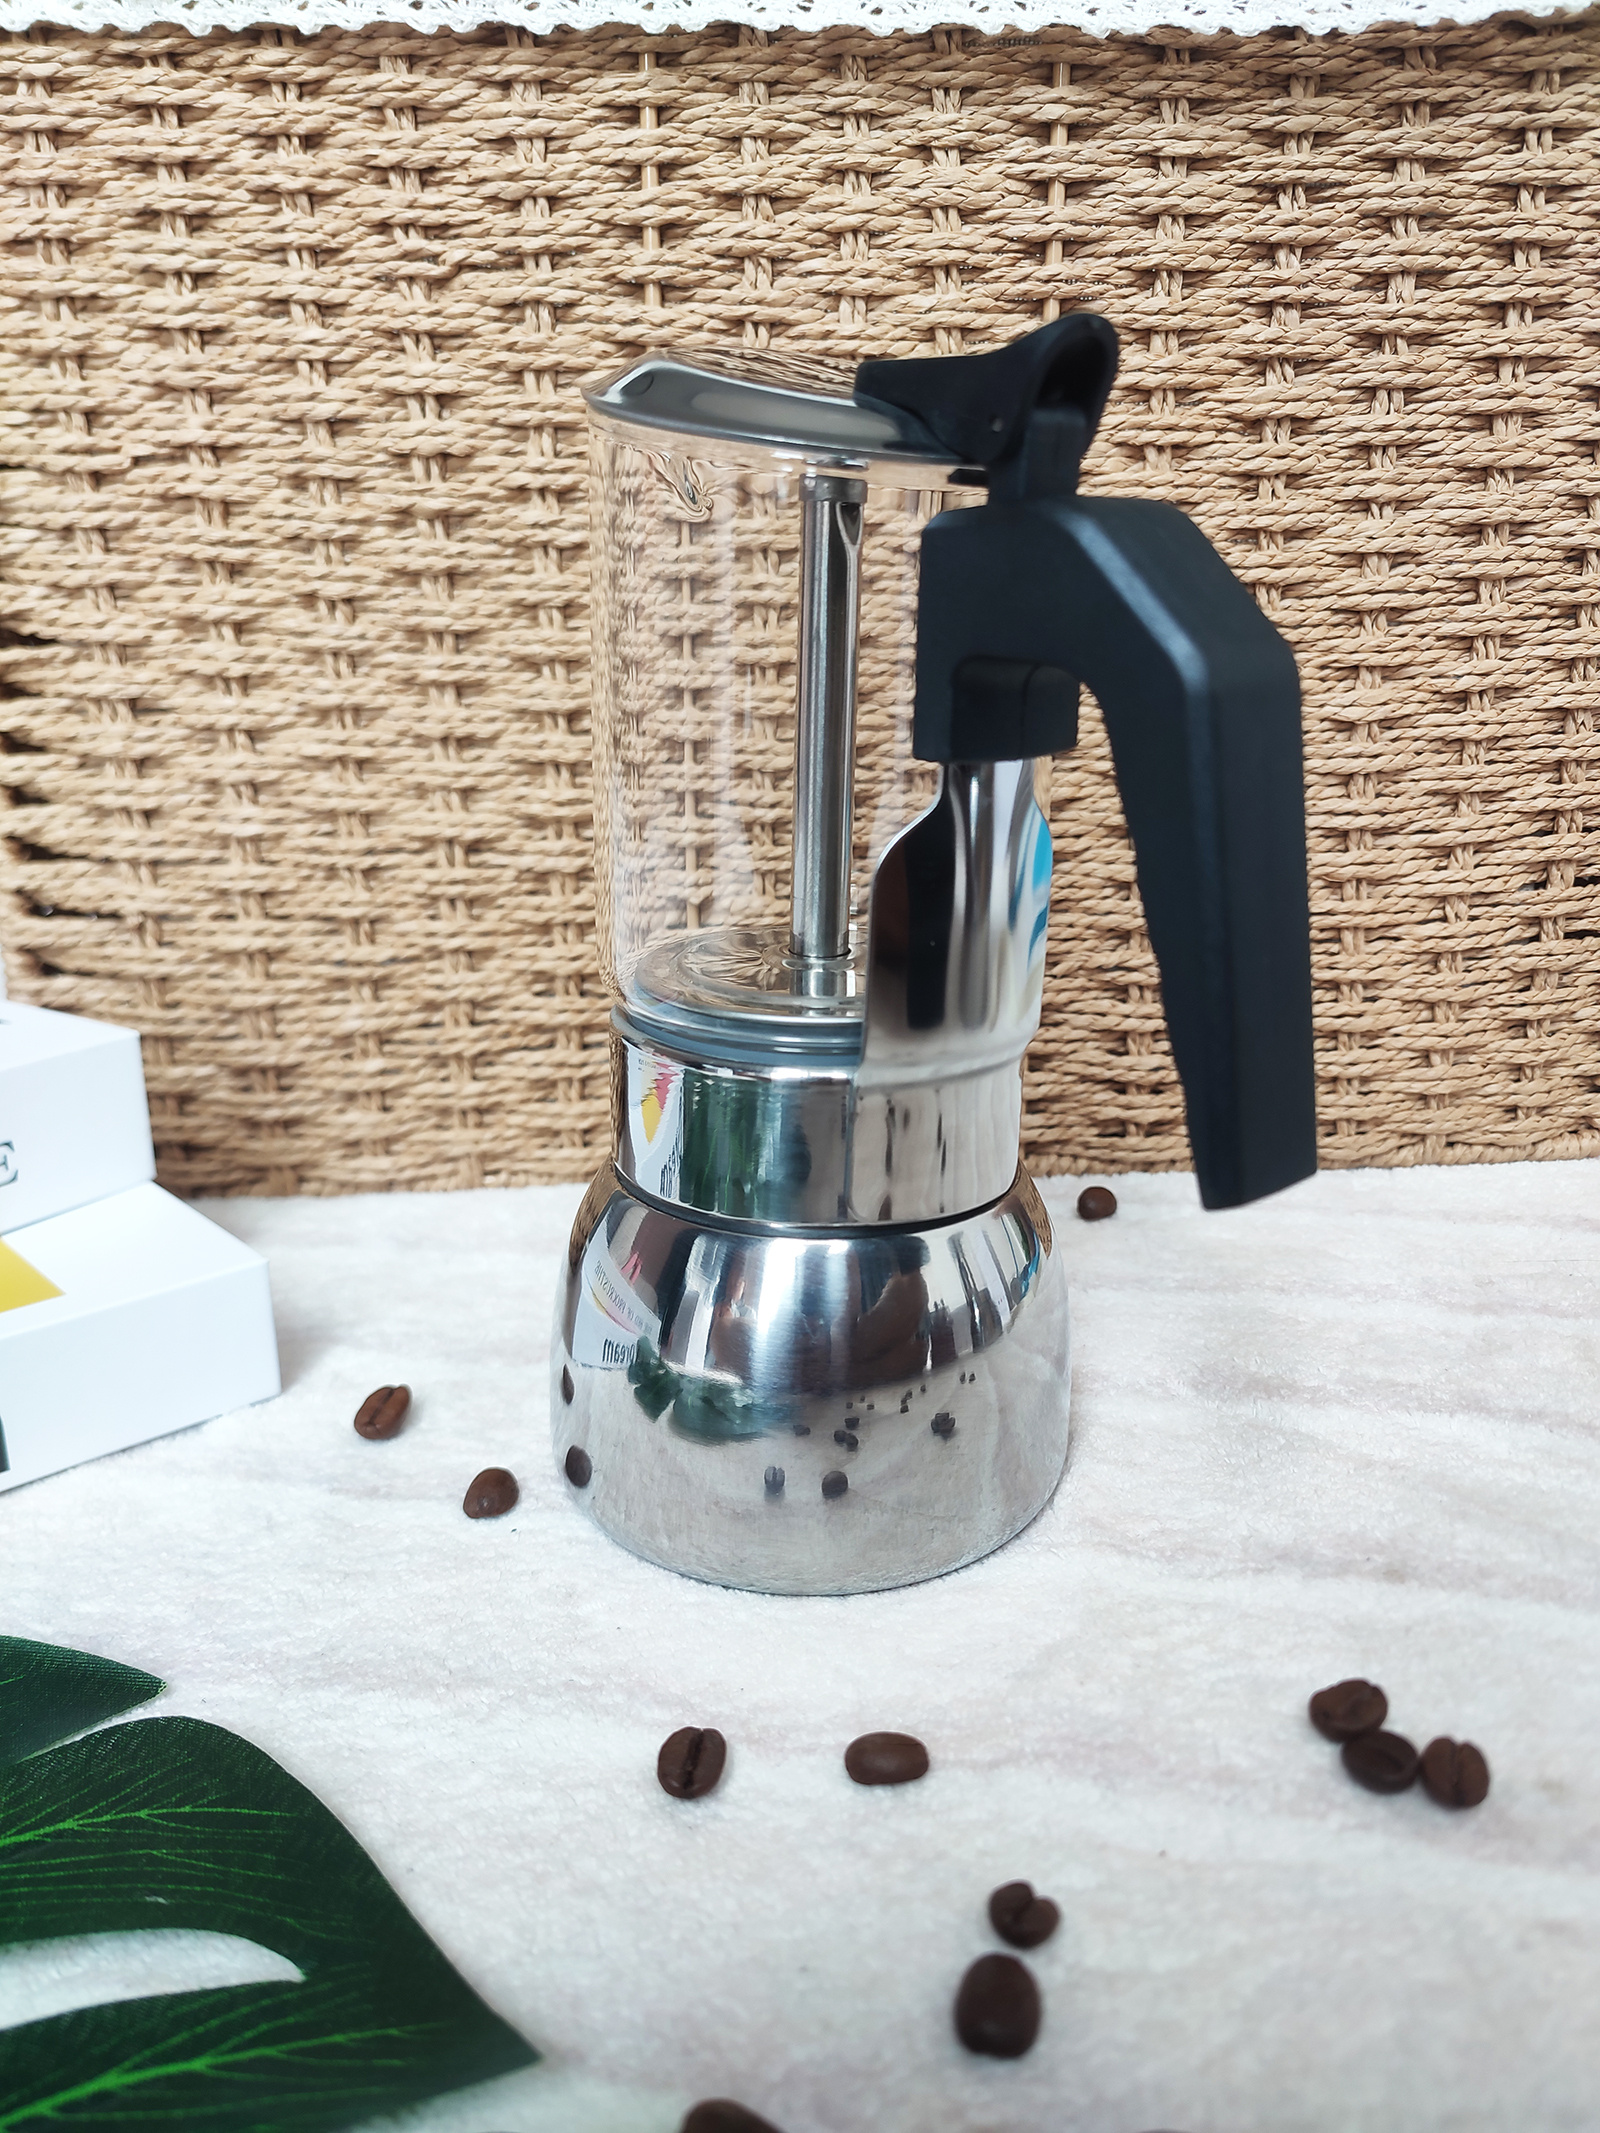 Bialetti venus Cafetera espresso para estufa, 6 tazas, acero inoxidable